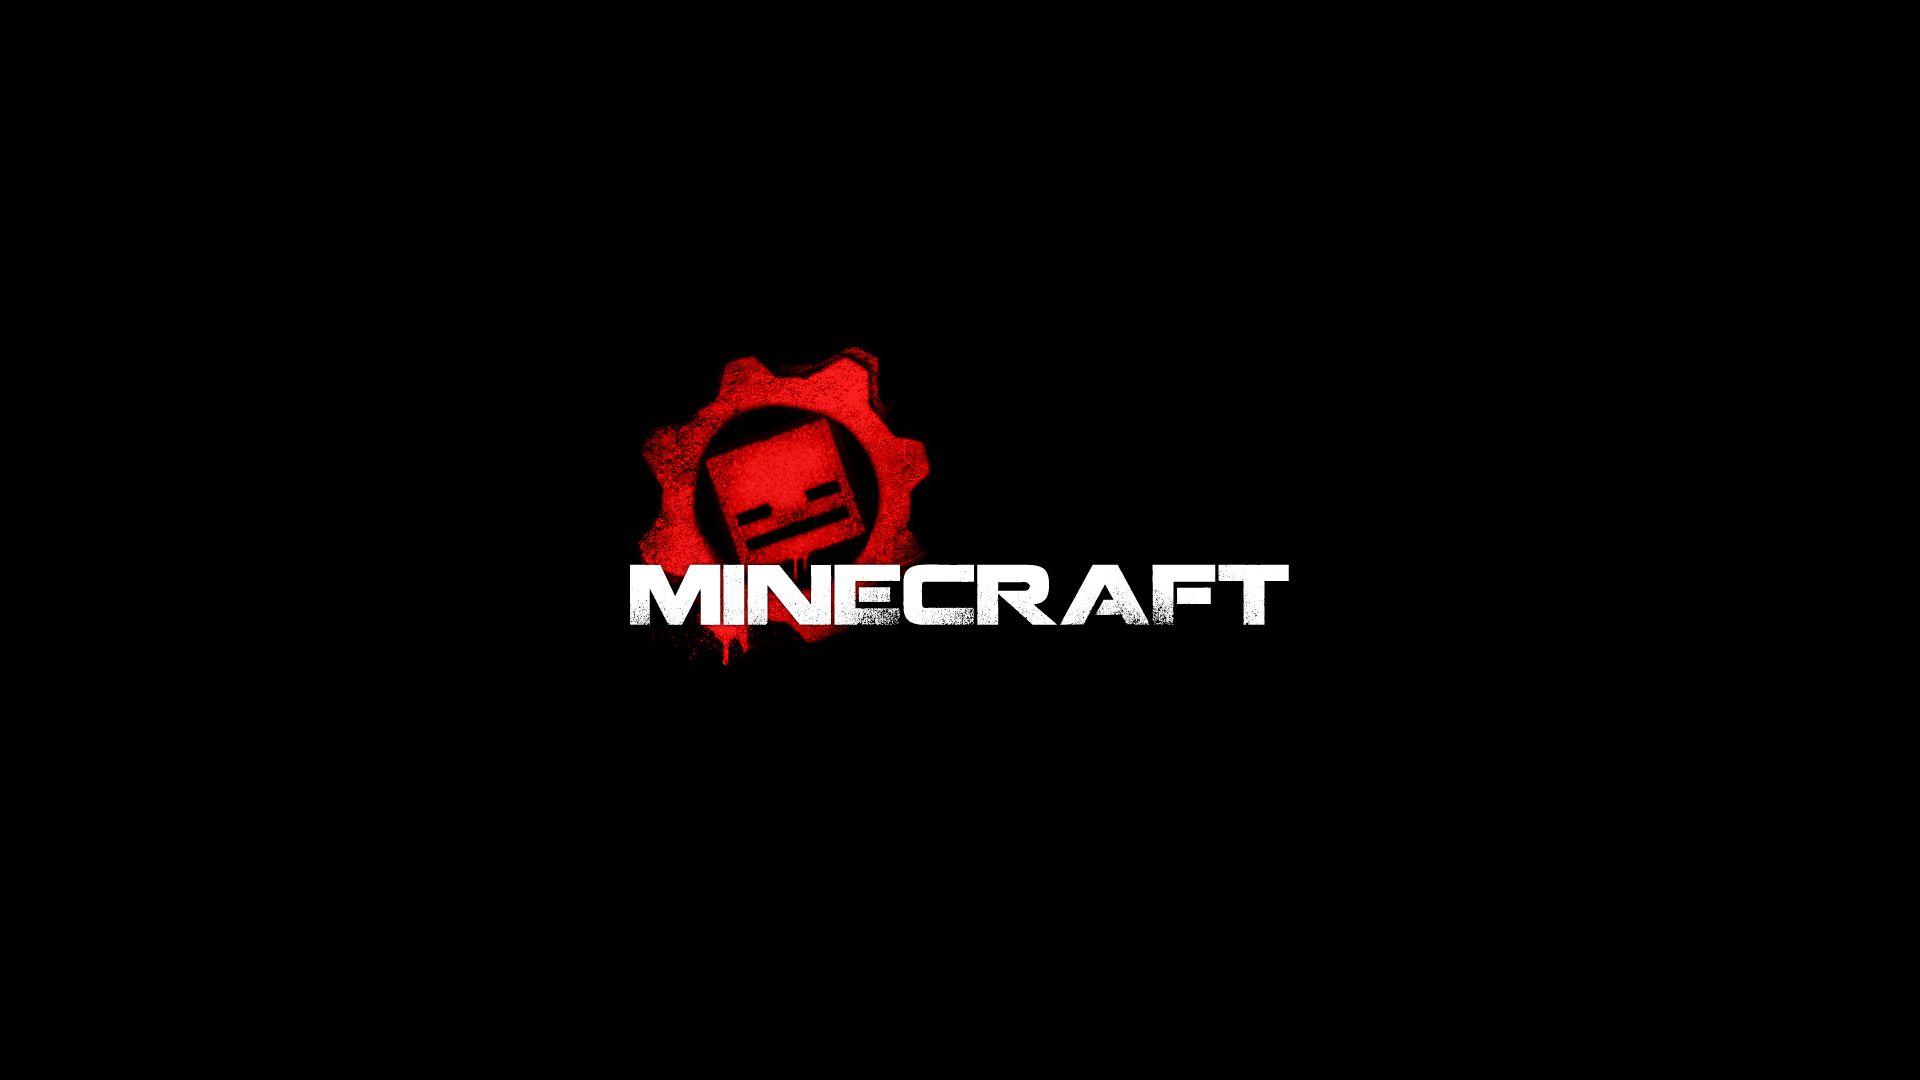 Wallpaper de Minecraft HD!